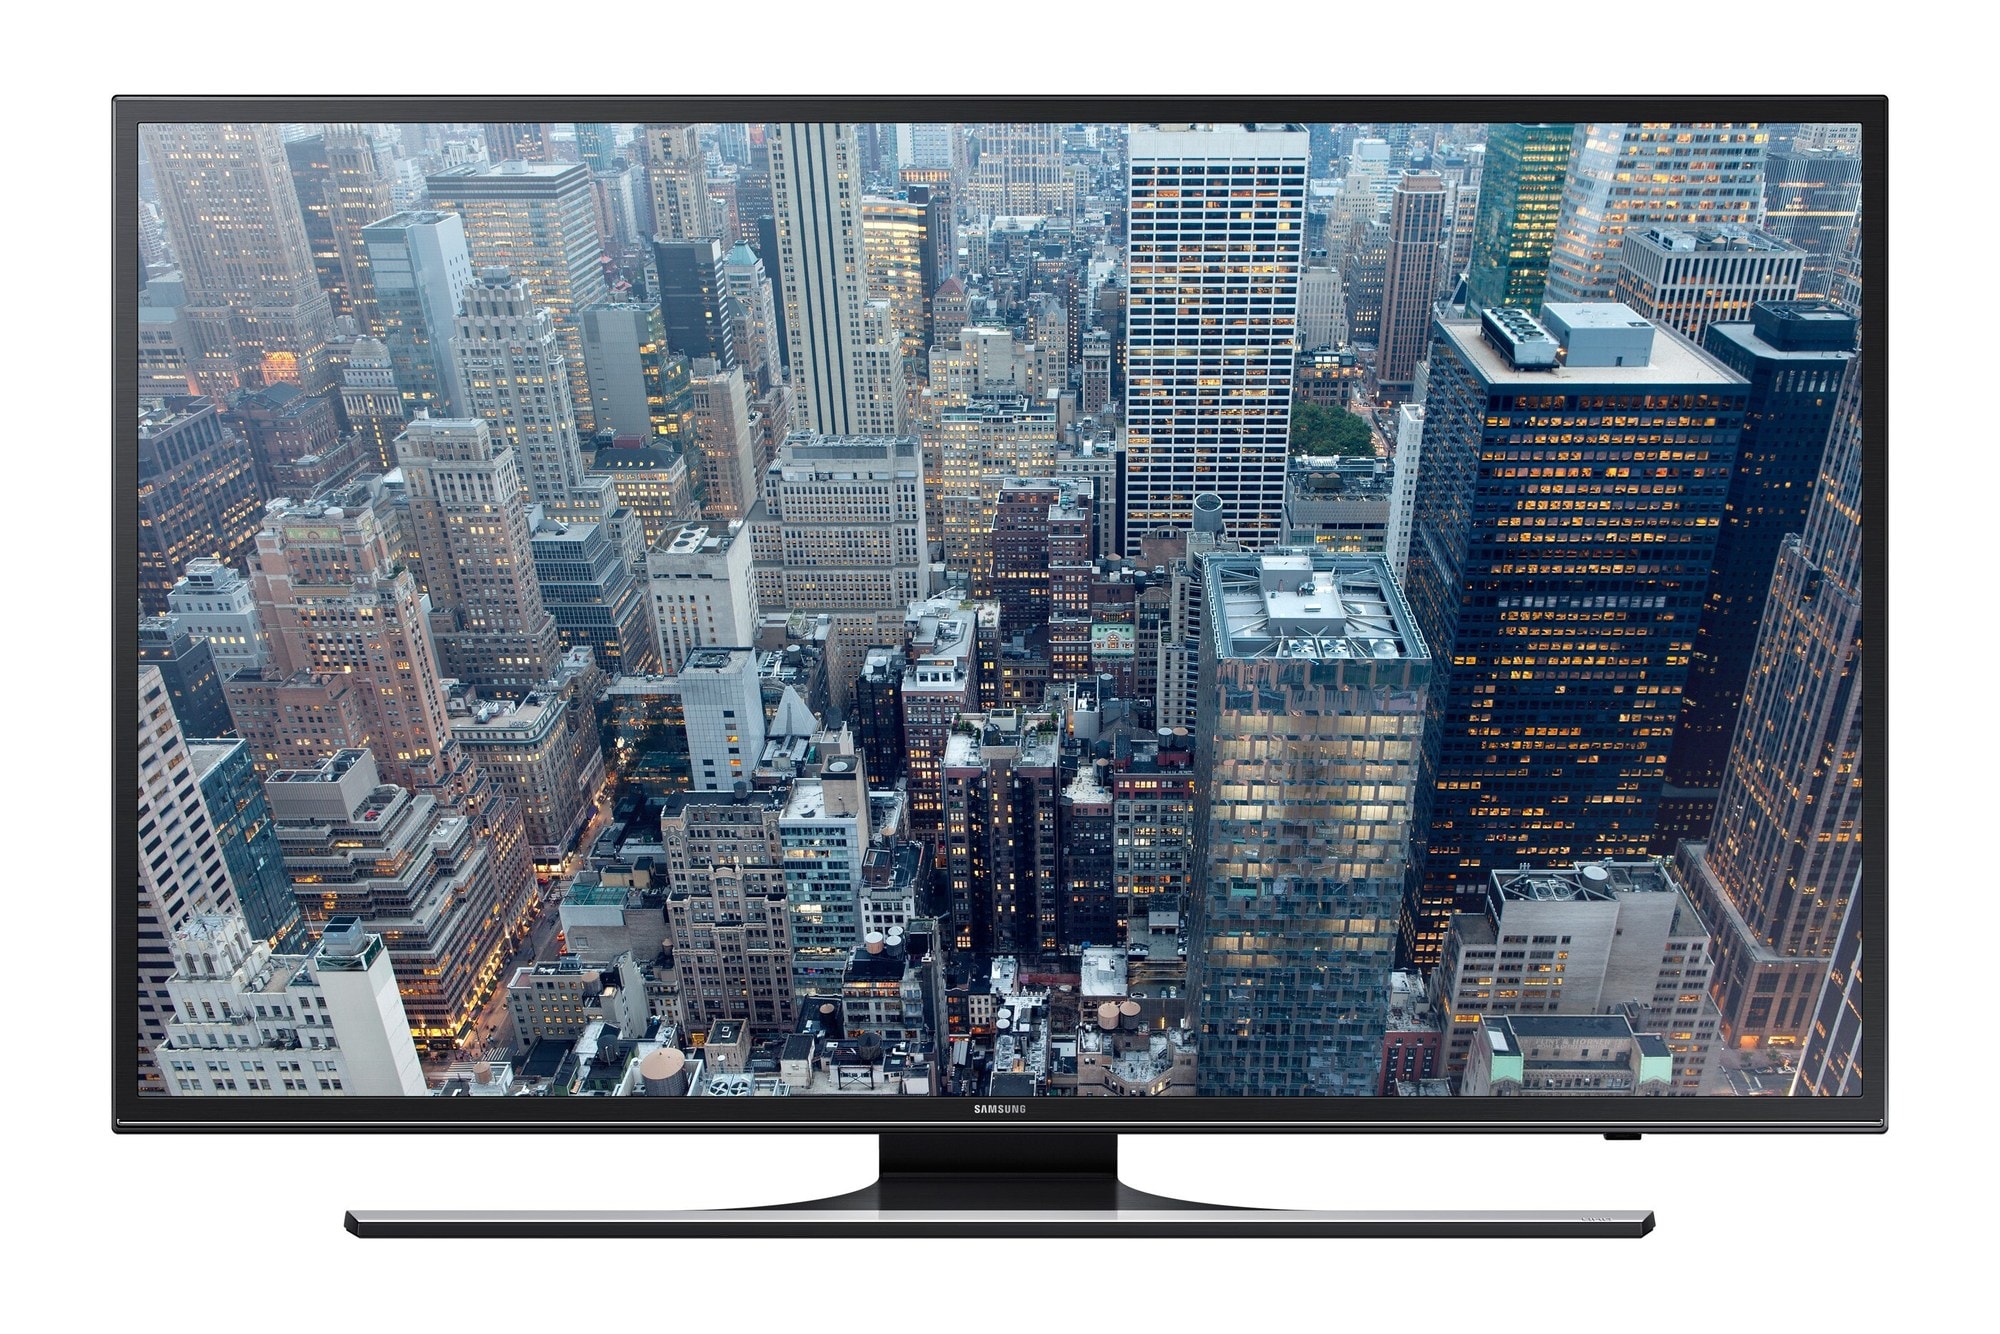 Samsung 50" LED-TV | Elgiganten